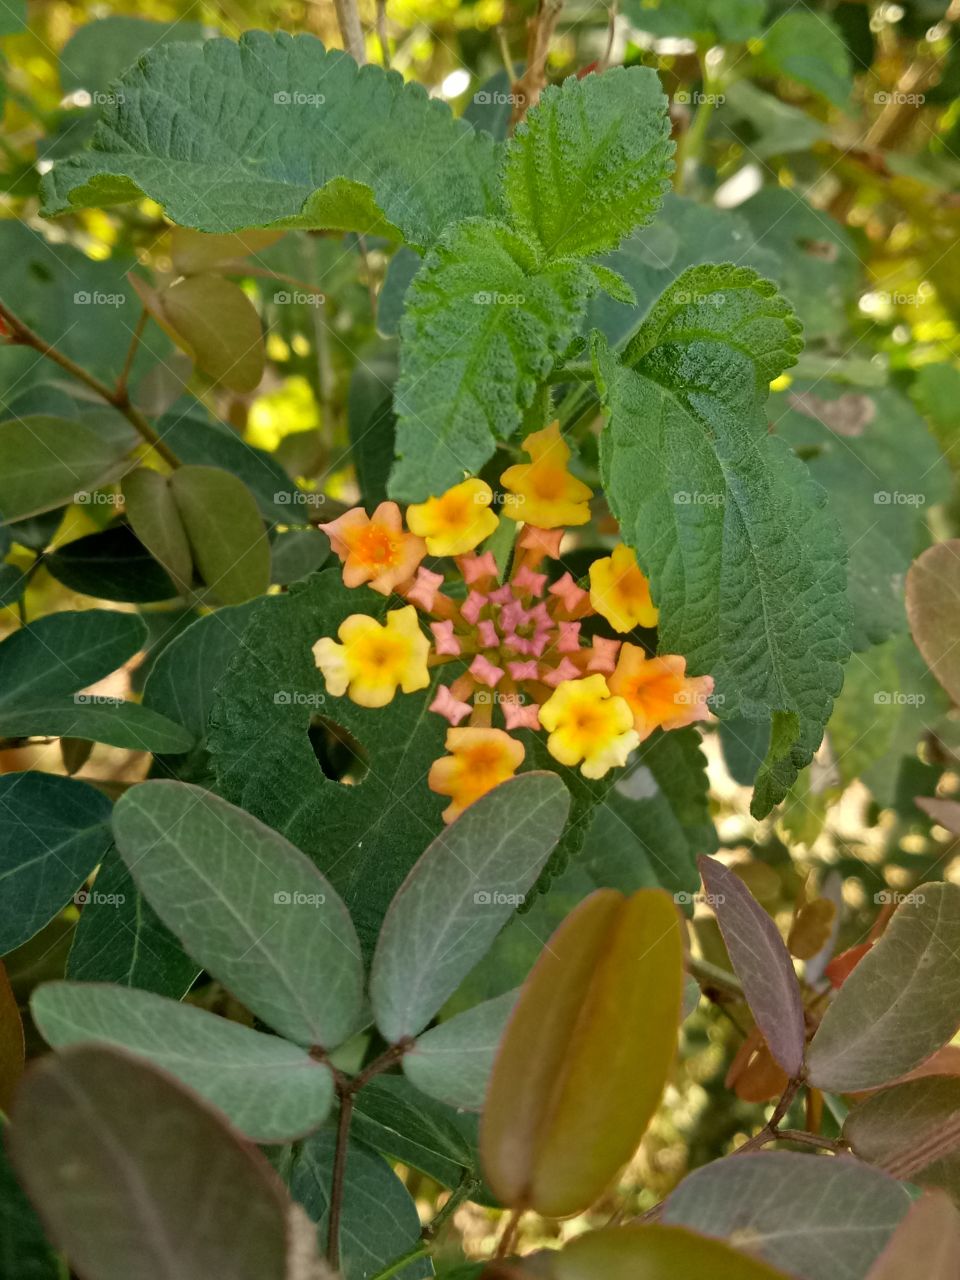 Indian Flower # Gurtule